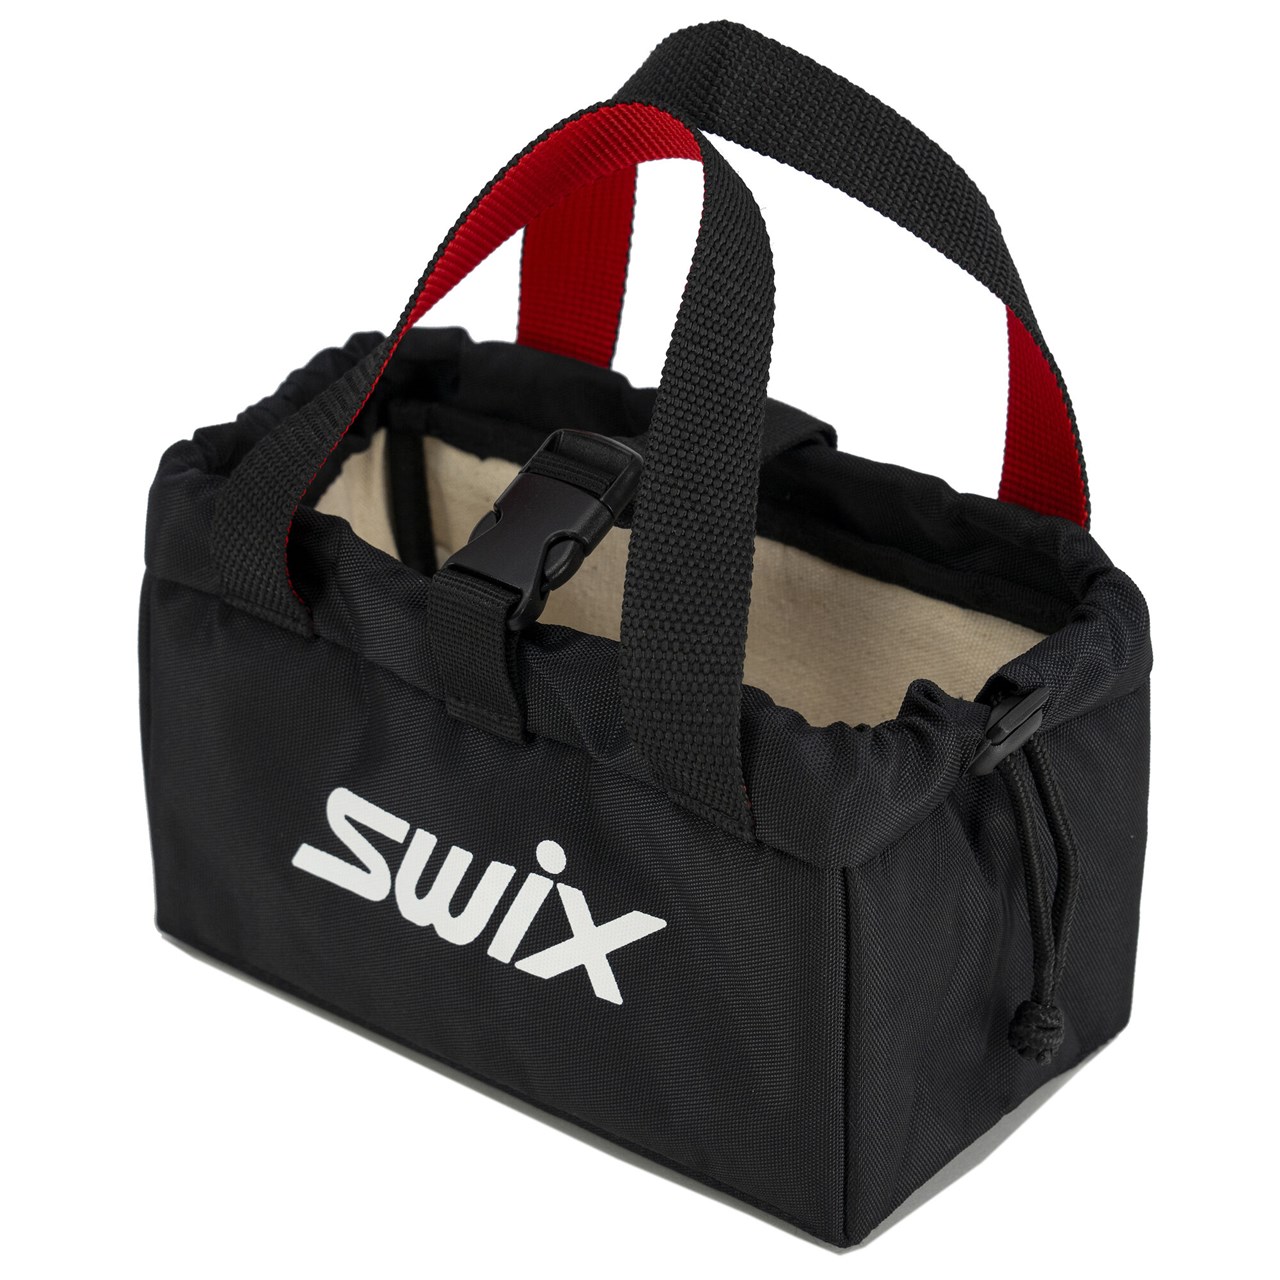 SIWX Swix Iron Bag